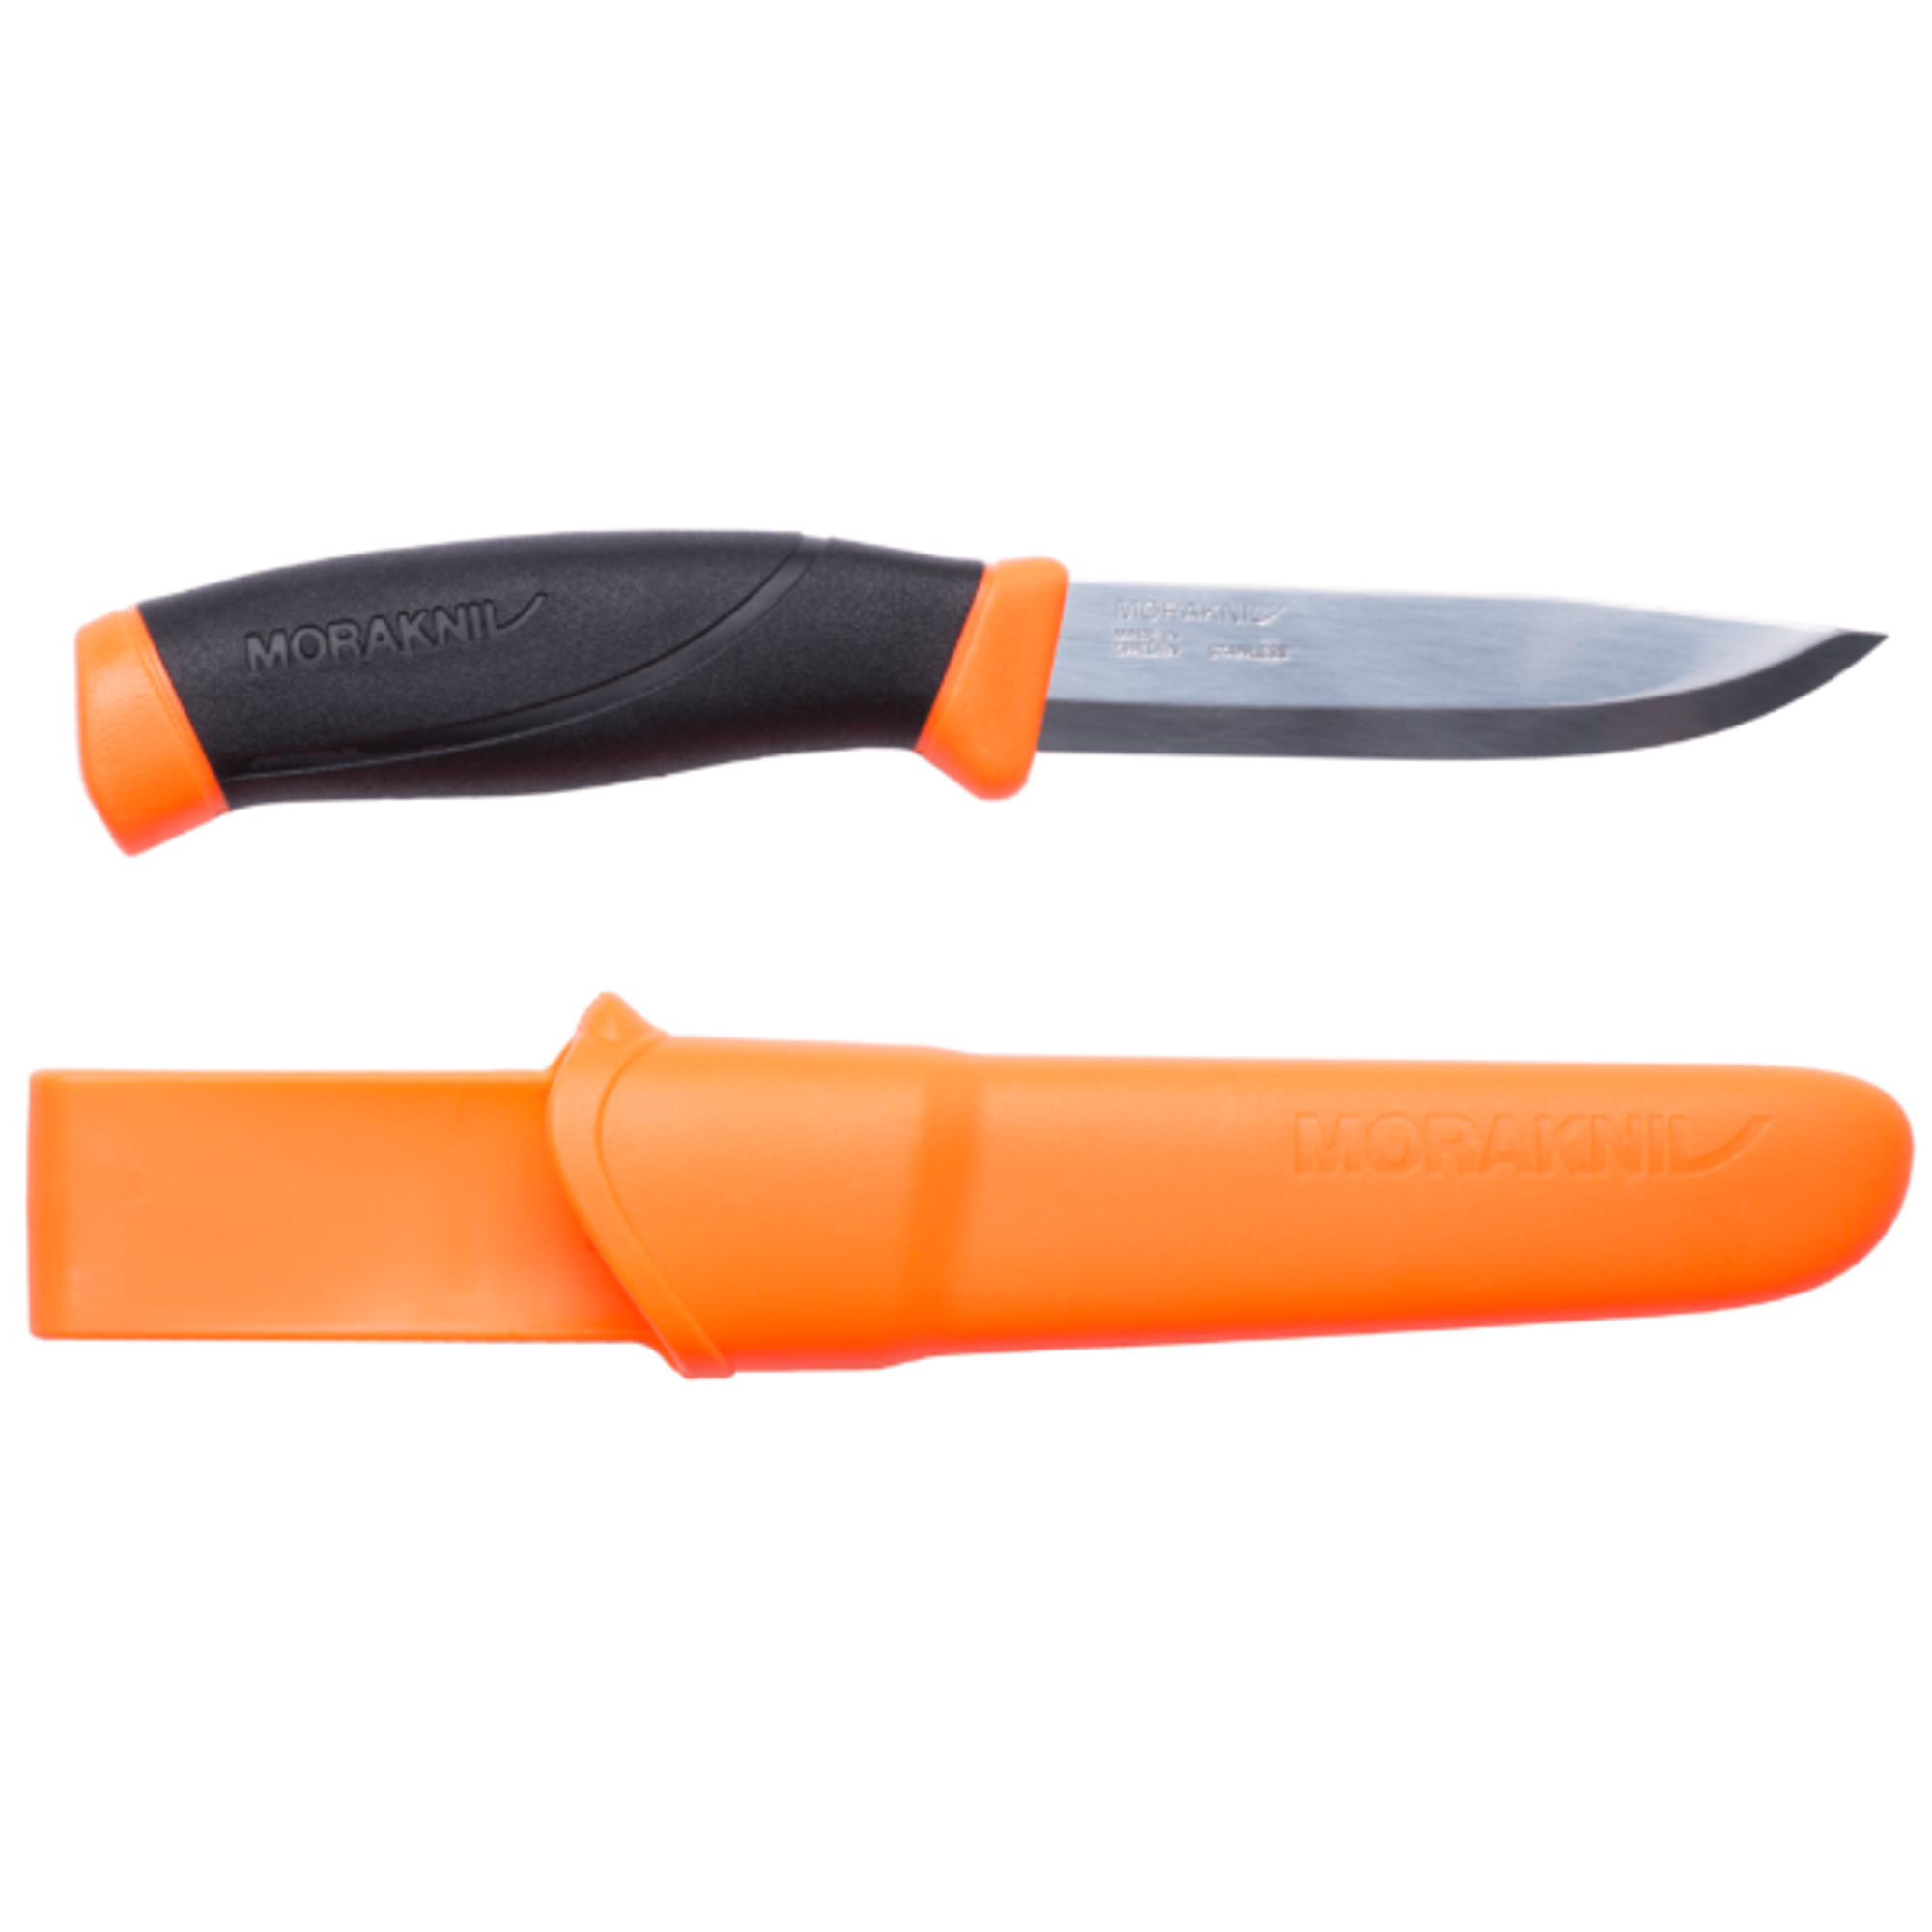 Companion Knife - Orange